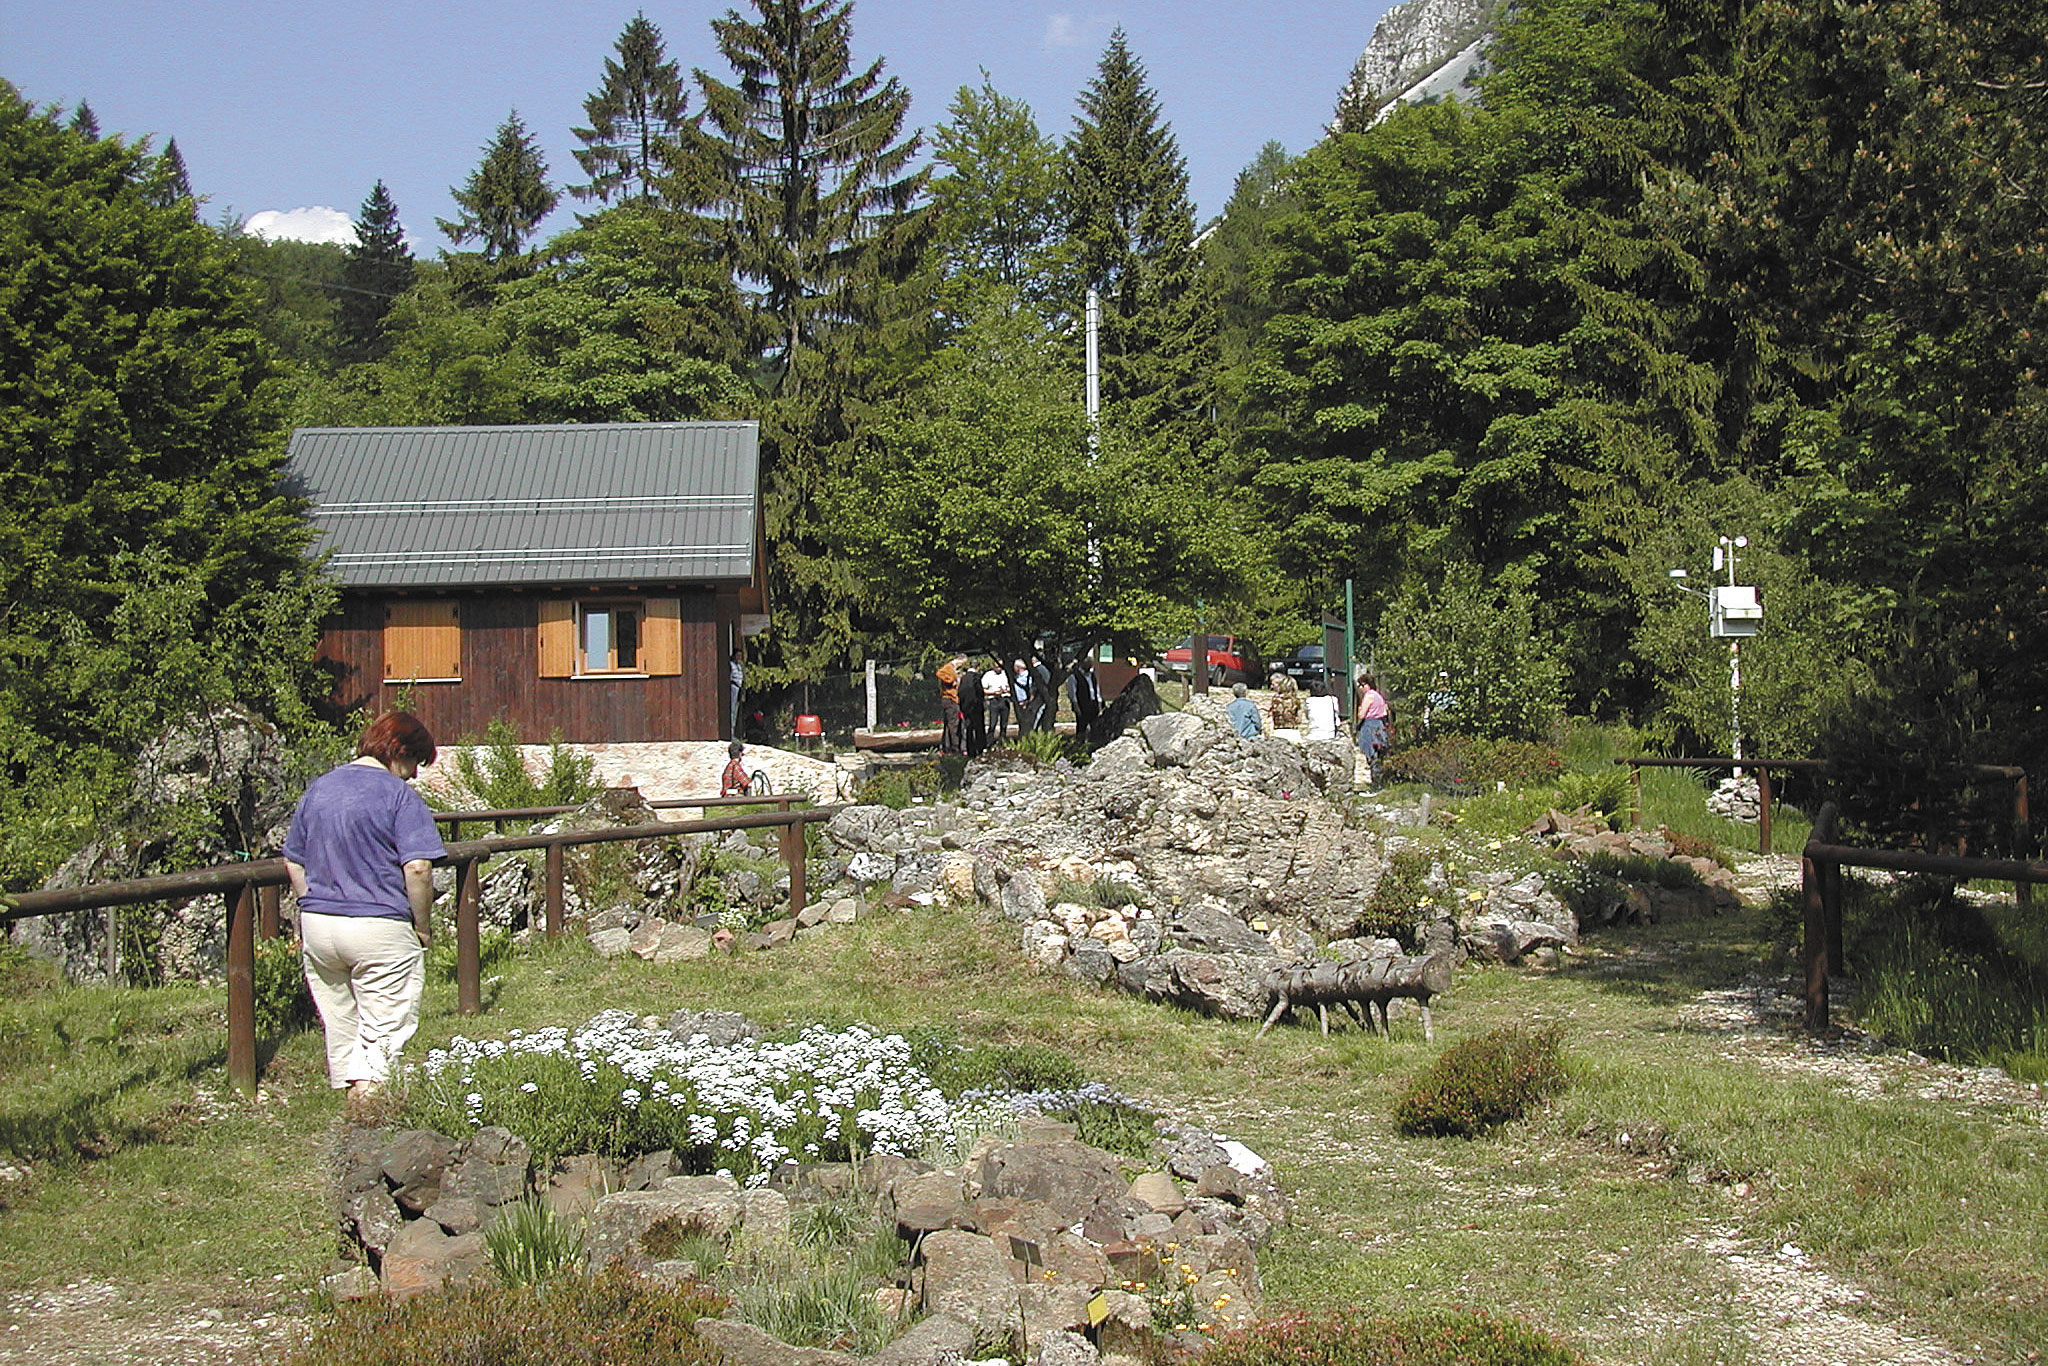 Scopri il Giardino Botanico Alpino Pasubio